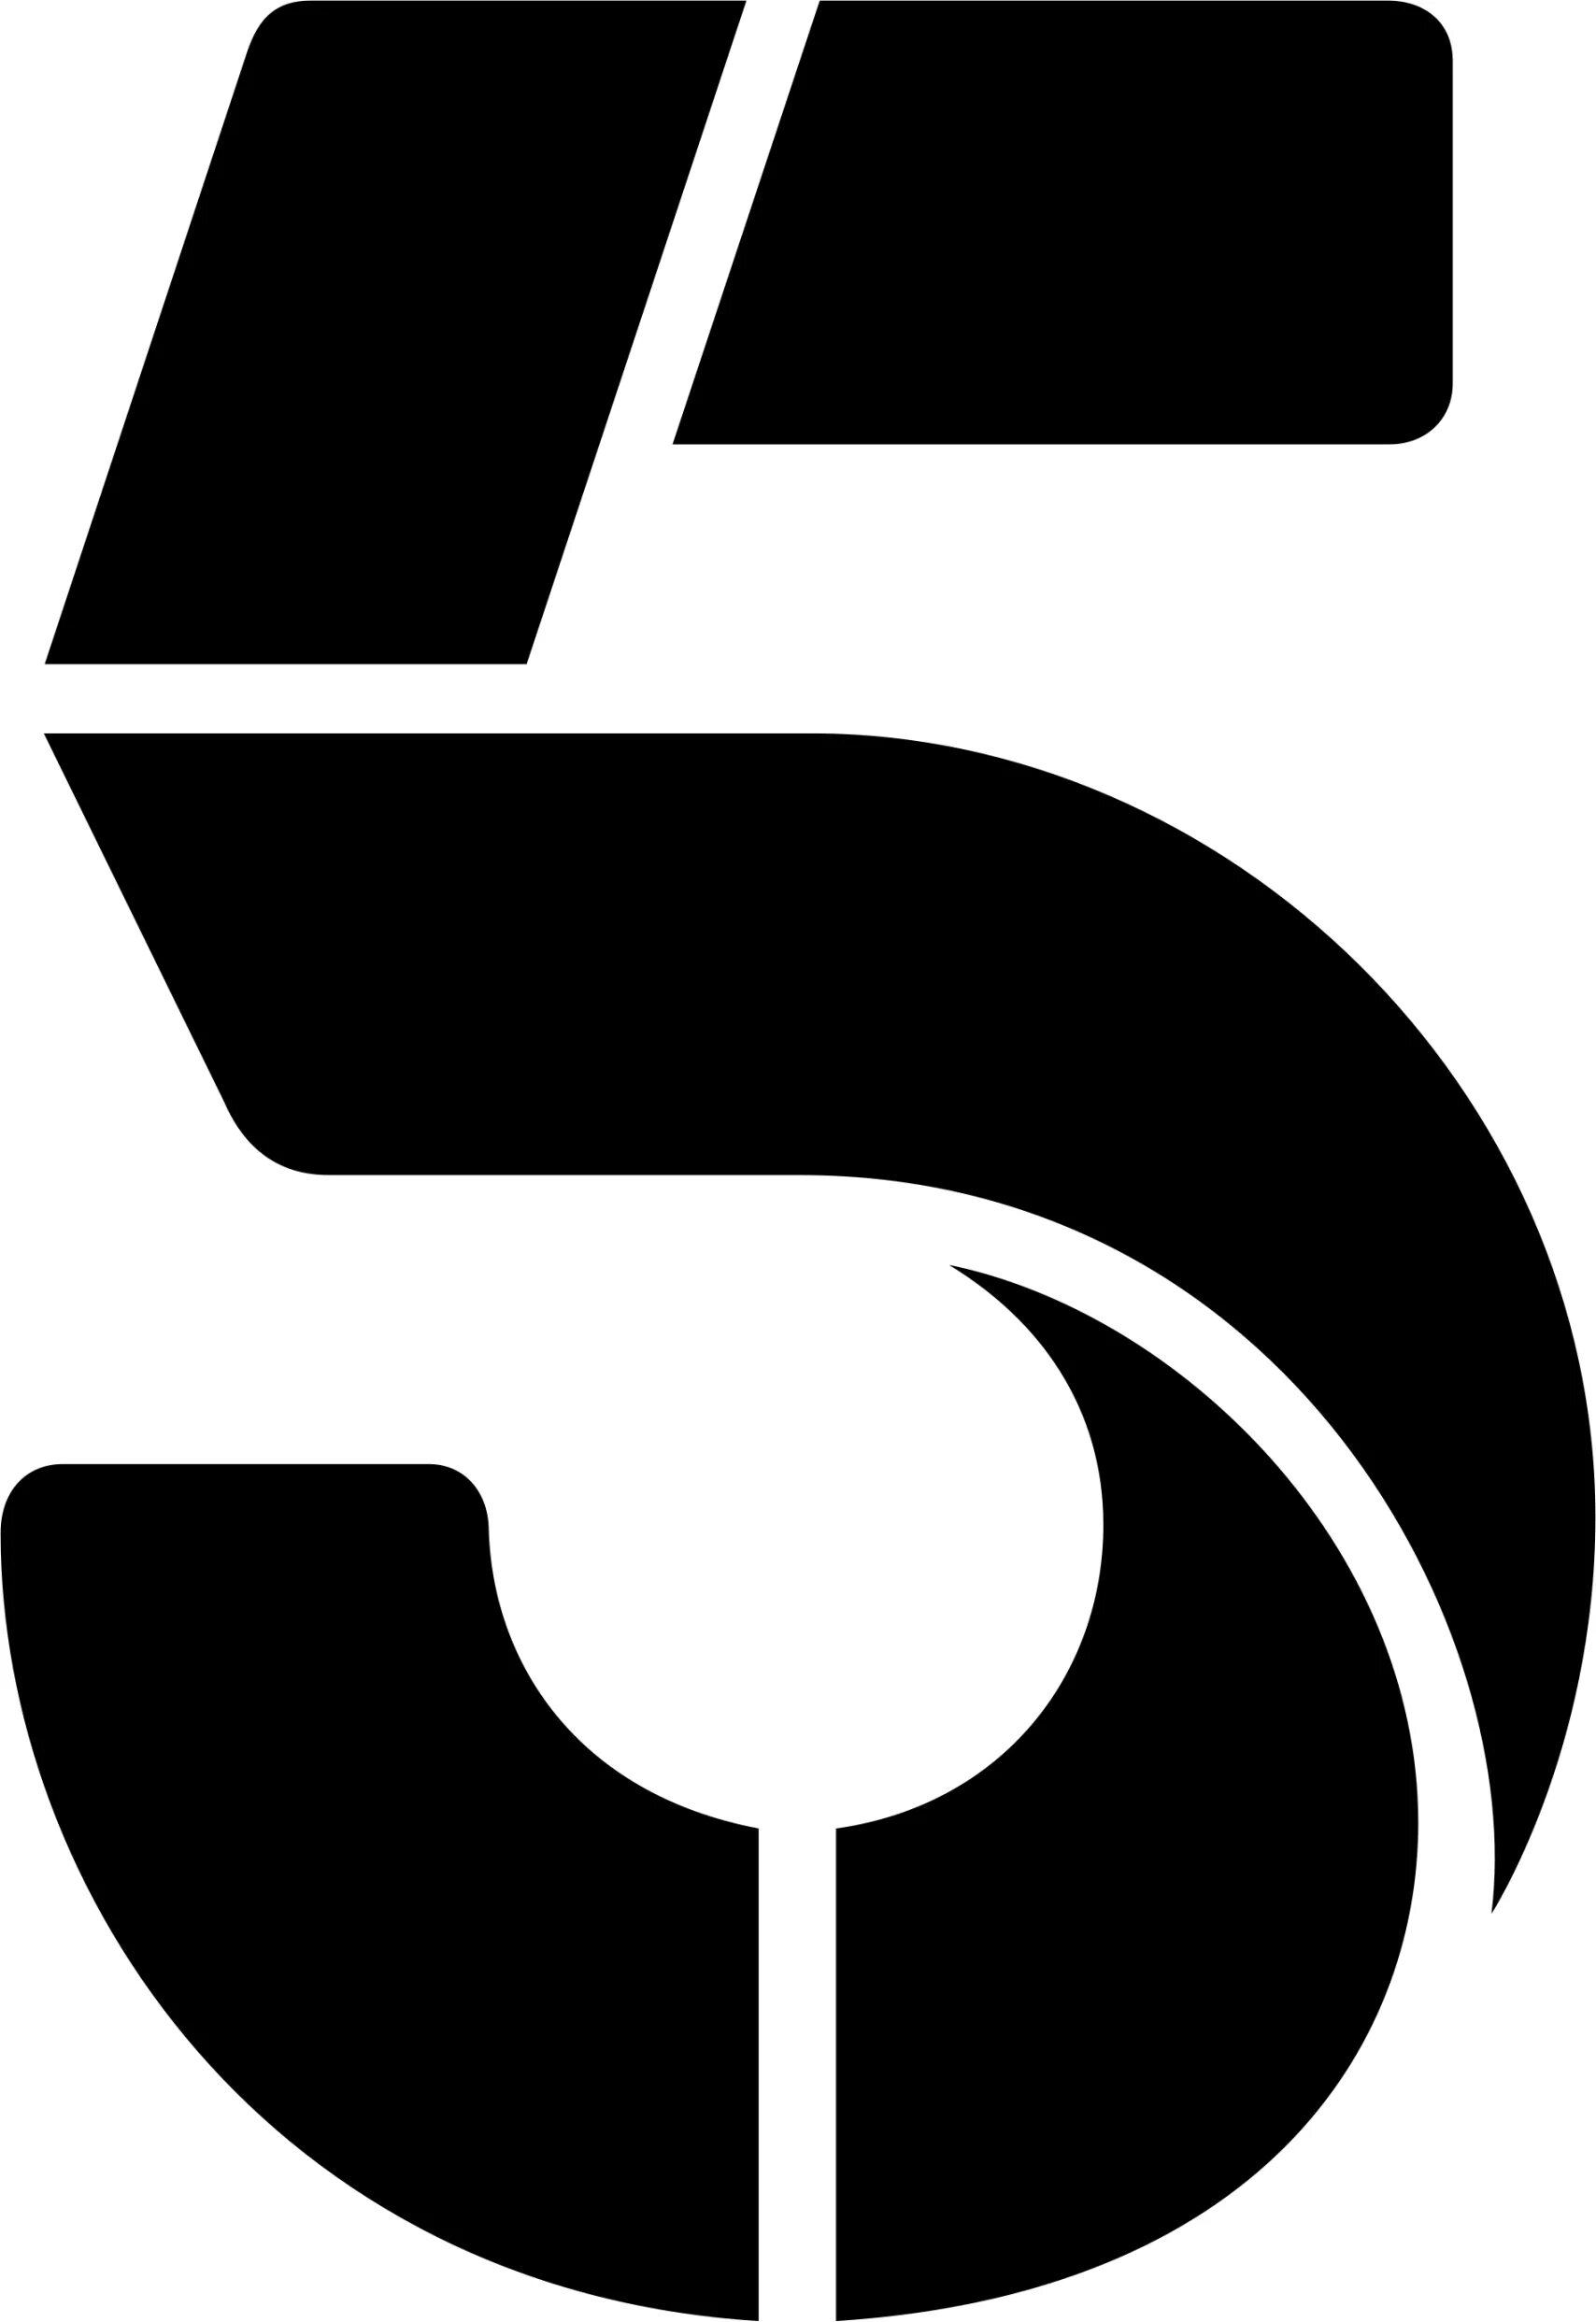 05. Логотип 5. 5 Канал. Логотипы с цифрами. 5 Канал логотип.